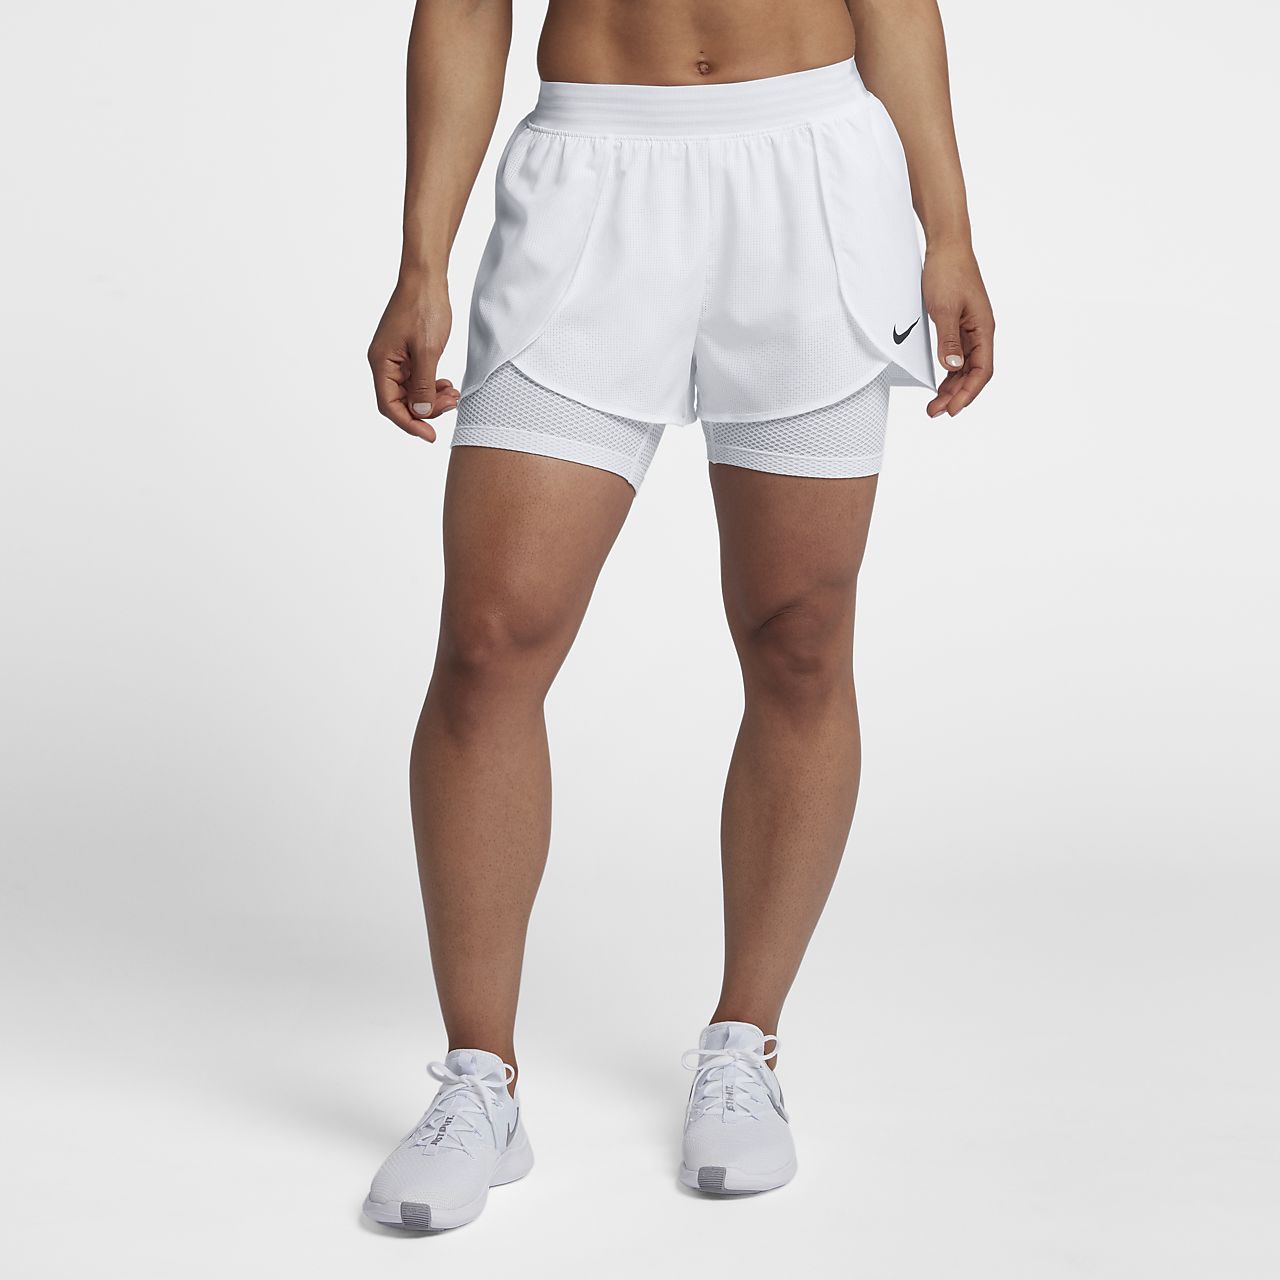 Womens Workout Clothes Nike Rldm